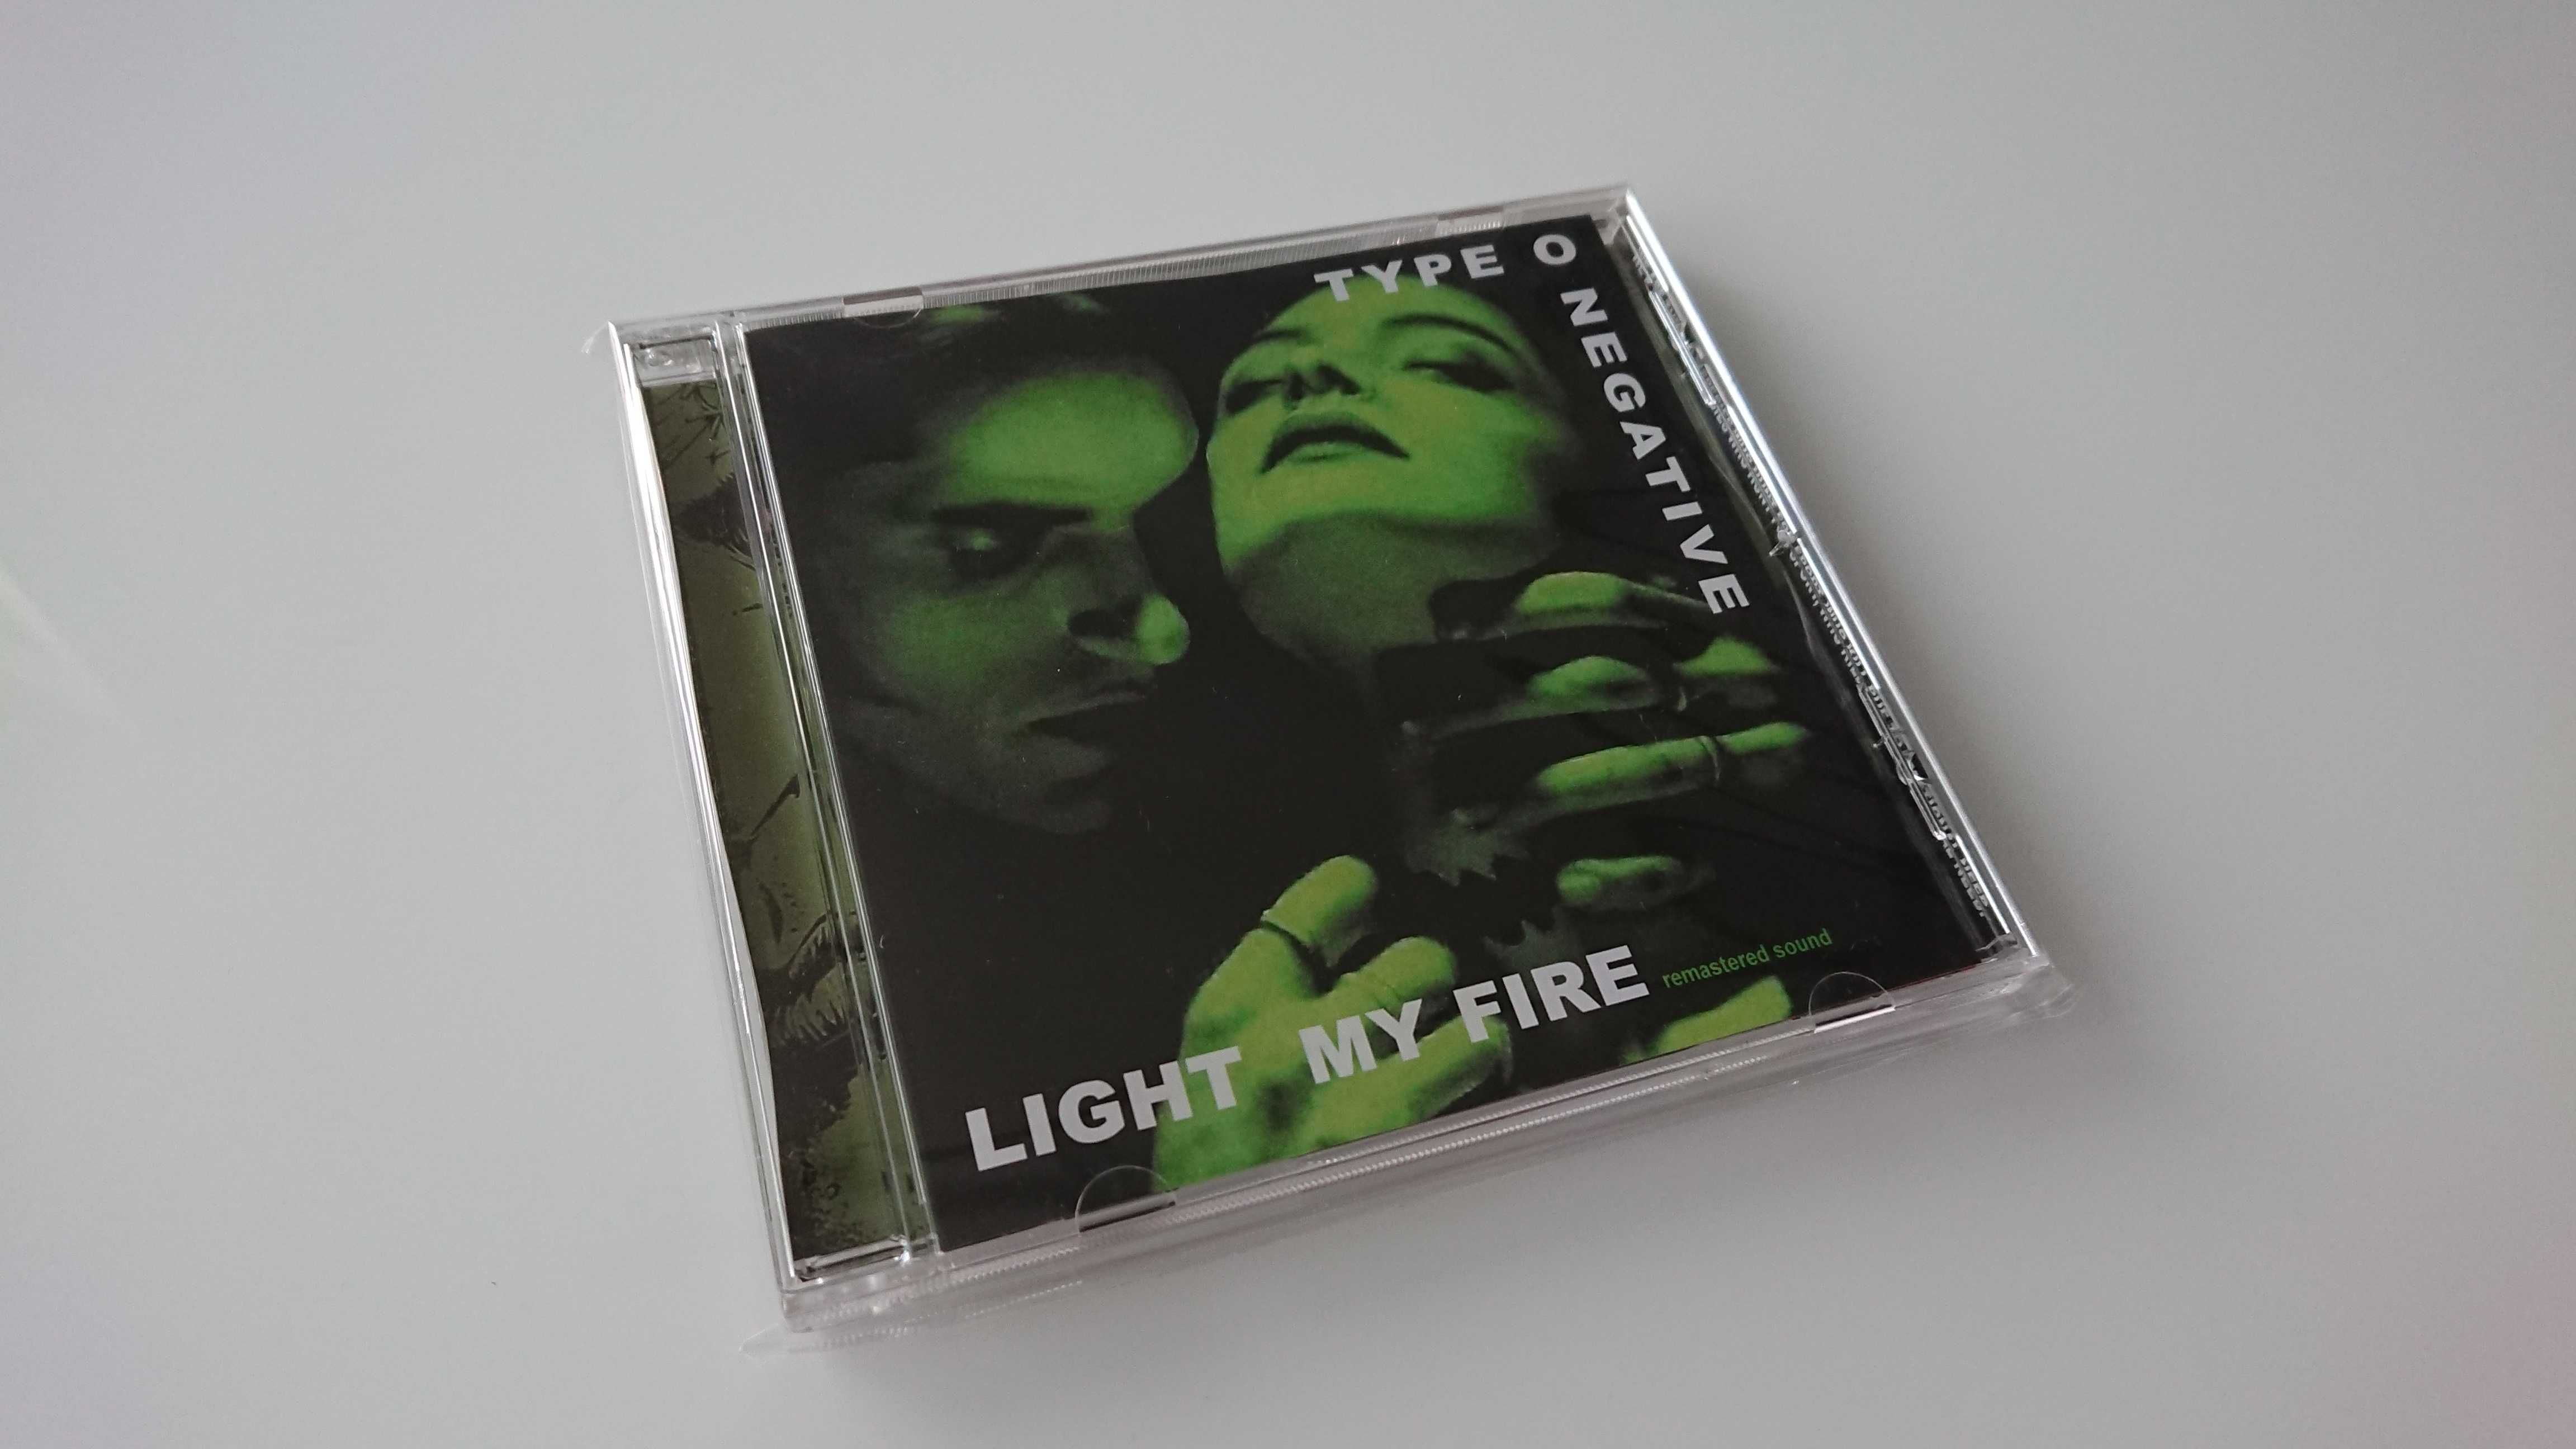 Type O Negative Light My Fire CD *NOWA 2020 Jewelcase Remastered Sound